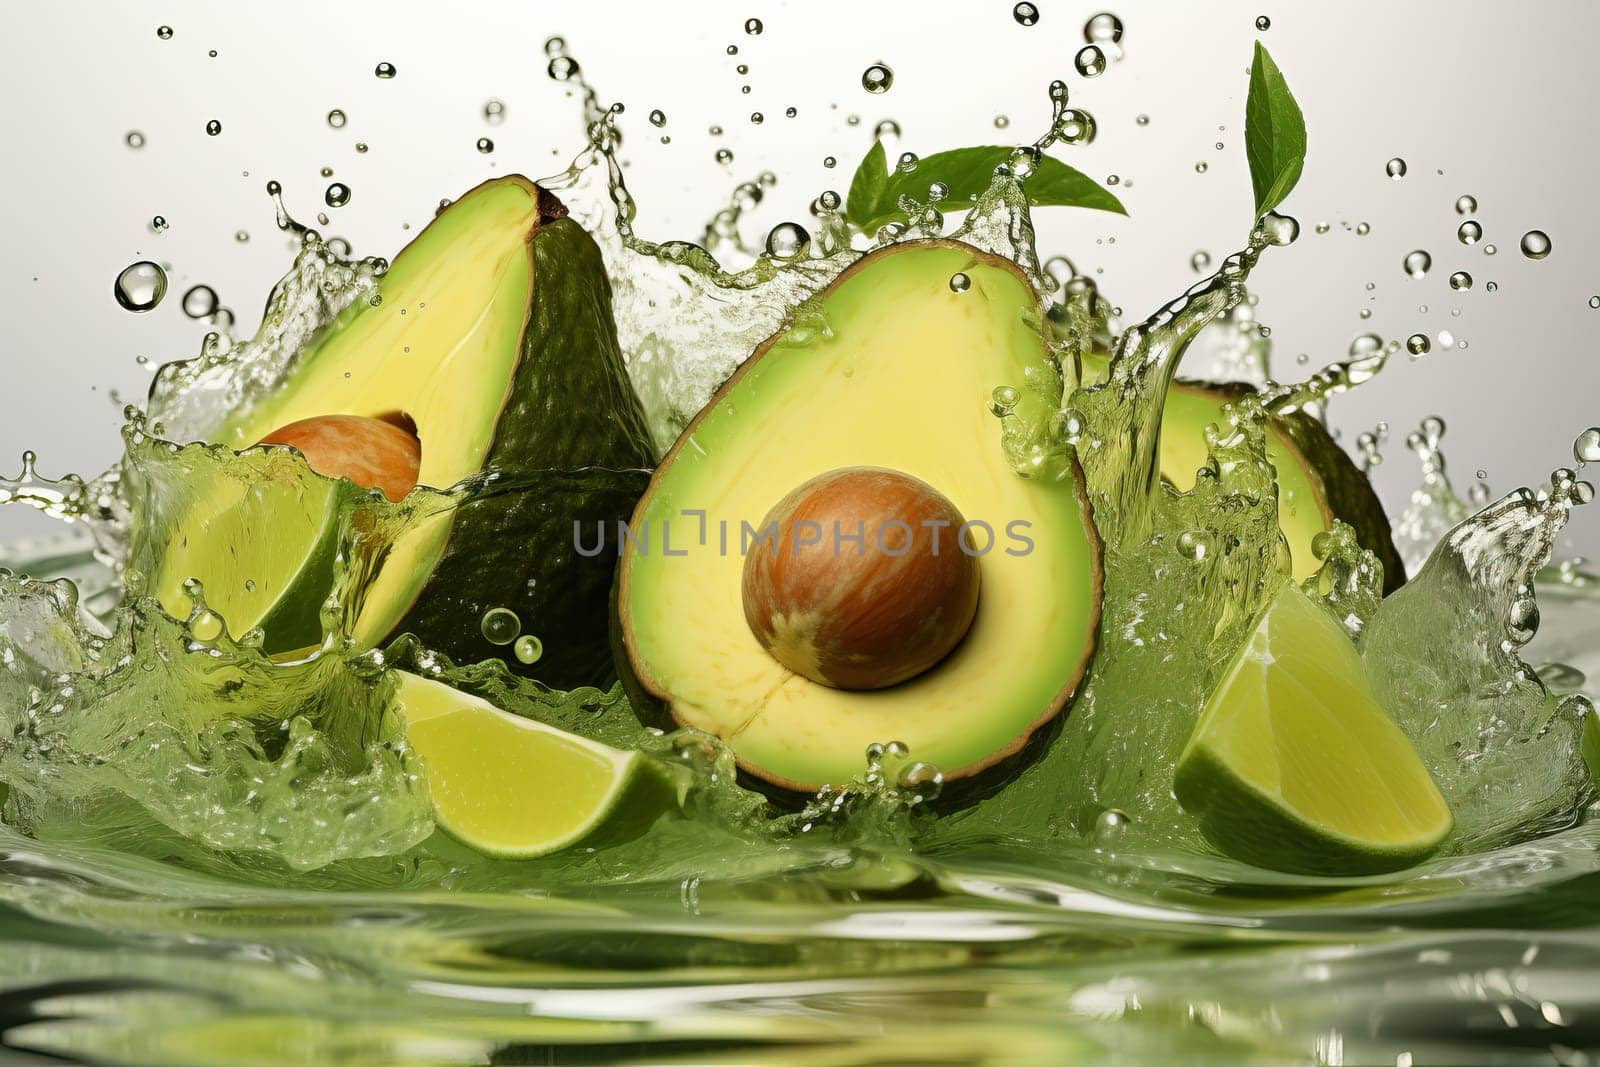 Avocado falling into water, splash of water from avocado, cut avocado in half. by Niko_Cingaryuk